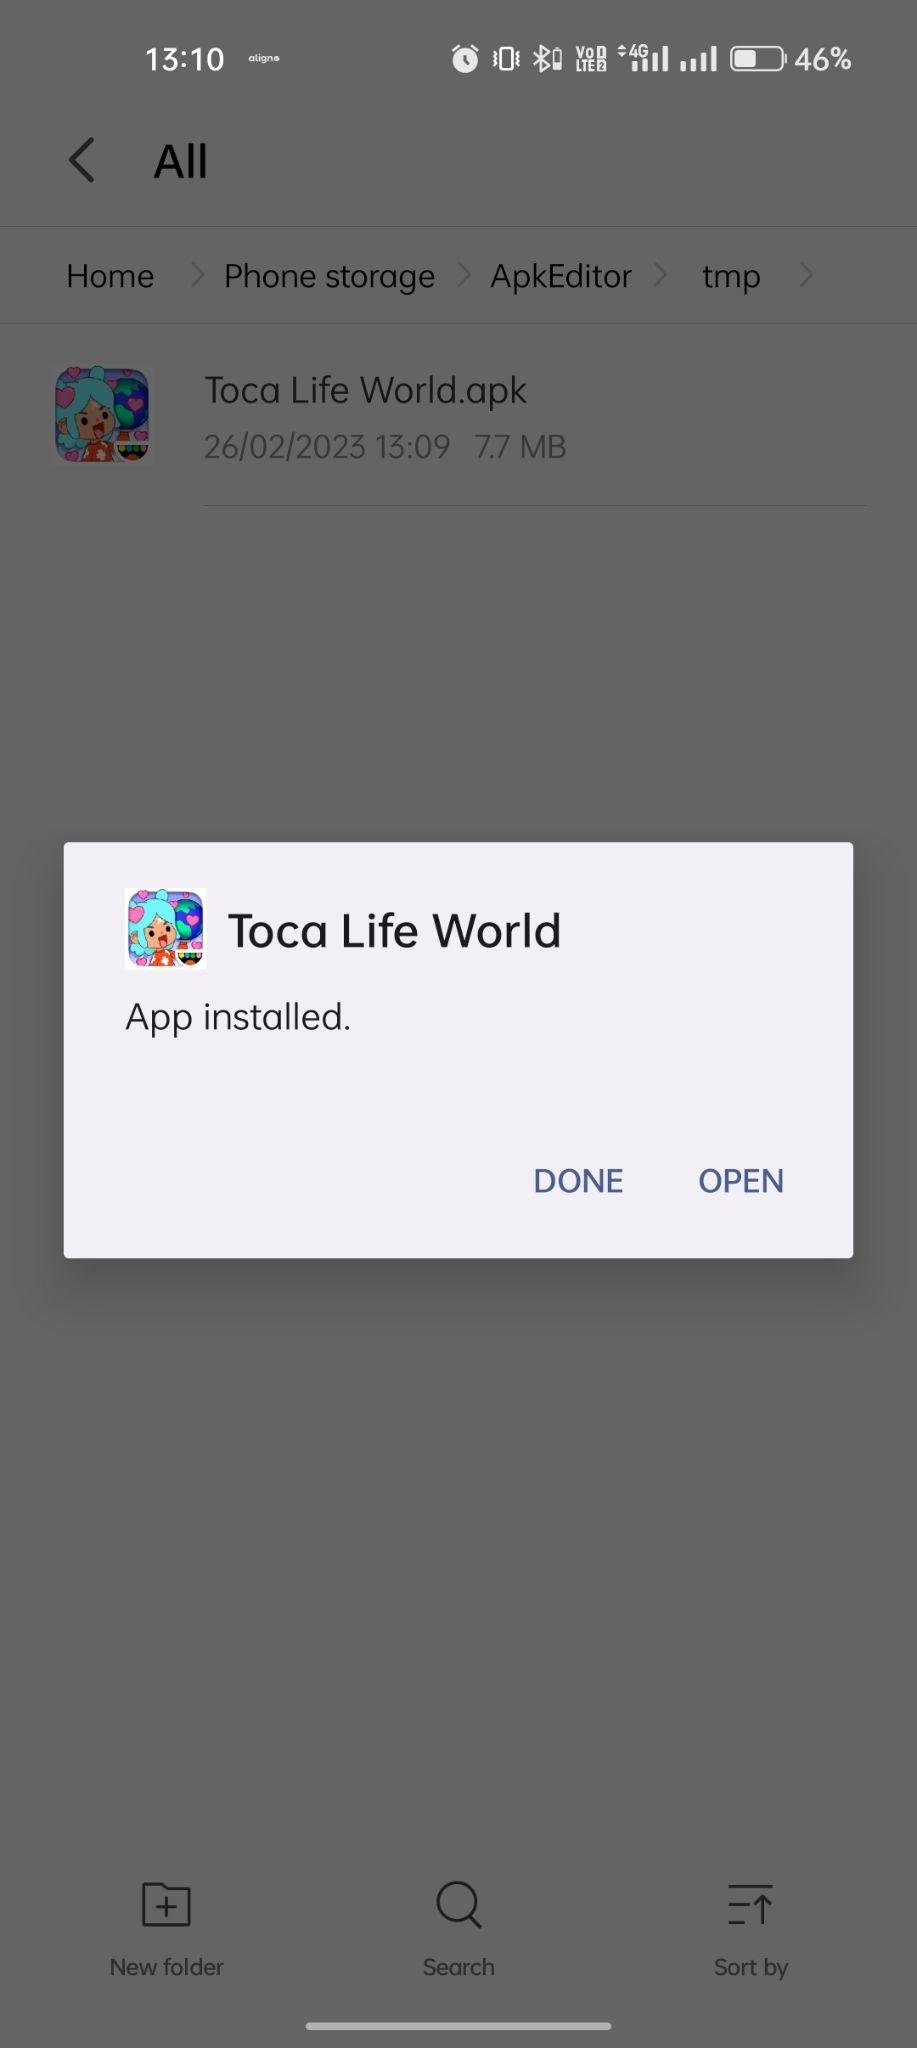 Toca Life World apk installed